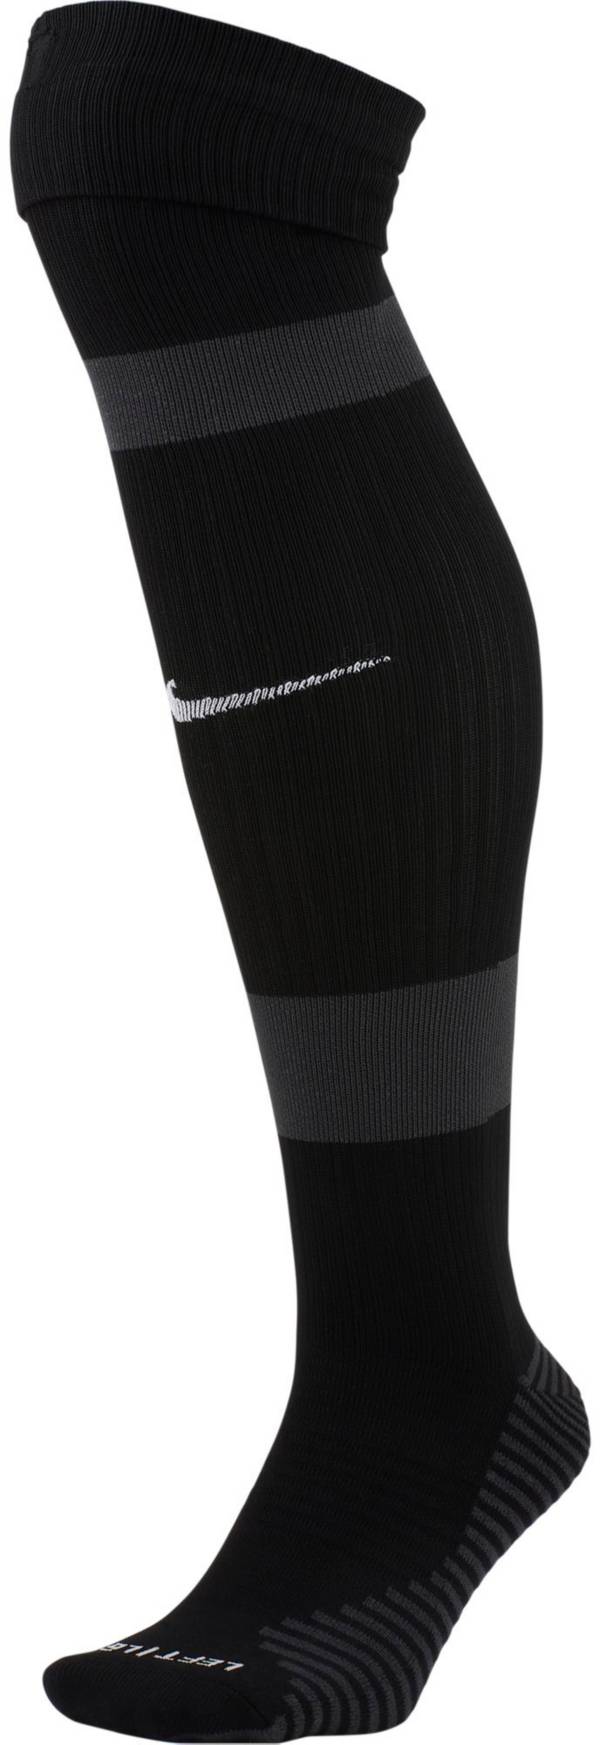 Nike MatchFit Knee-High Soccer Socks product image